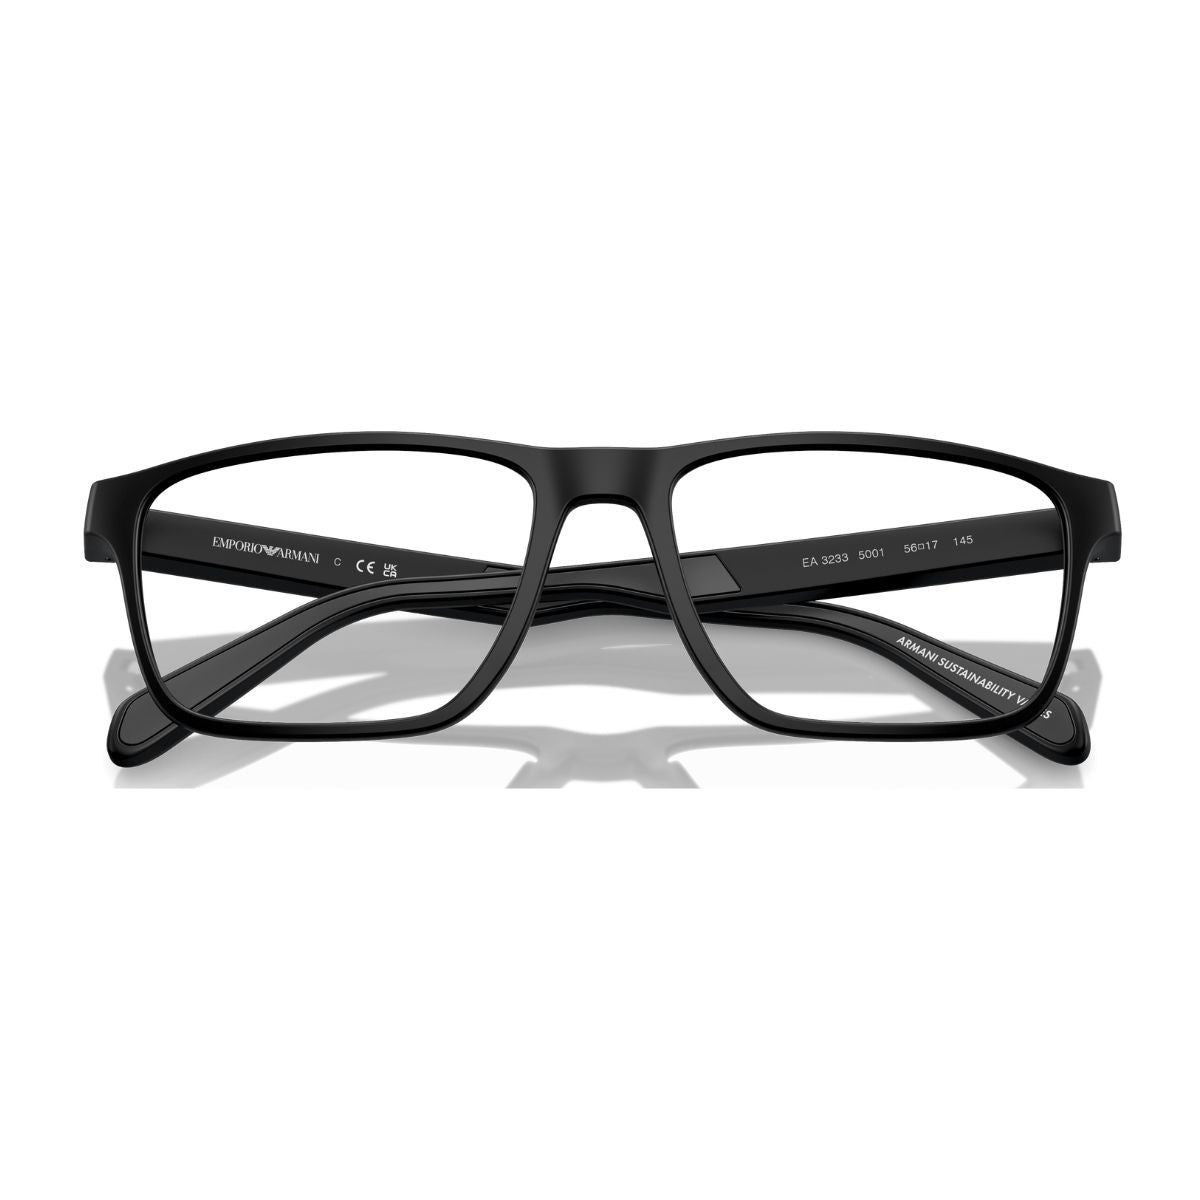 "Shop Emporio Armani 3233 5001 Prescription Eyeglasses Frame For Men's At Optorium"